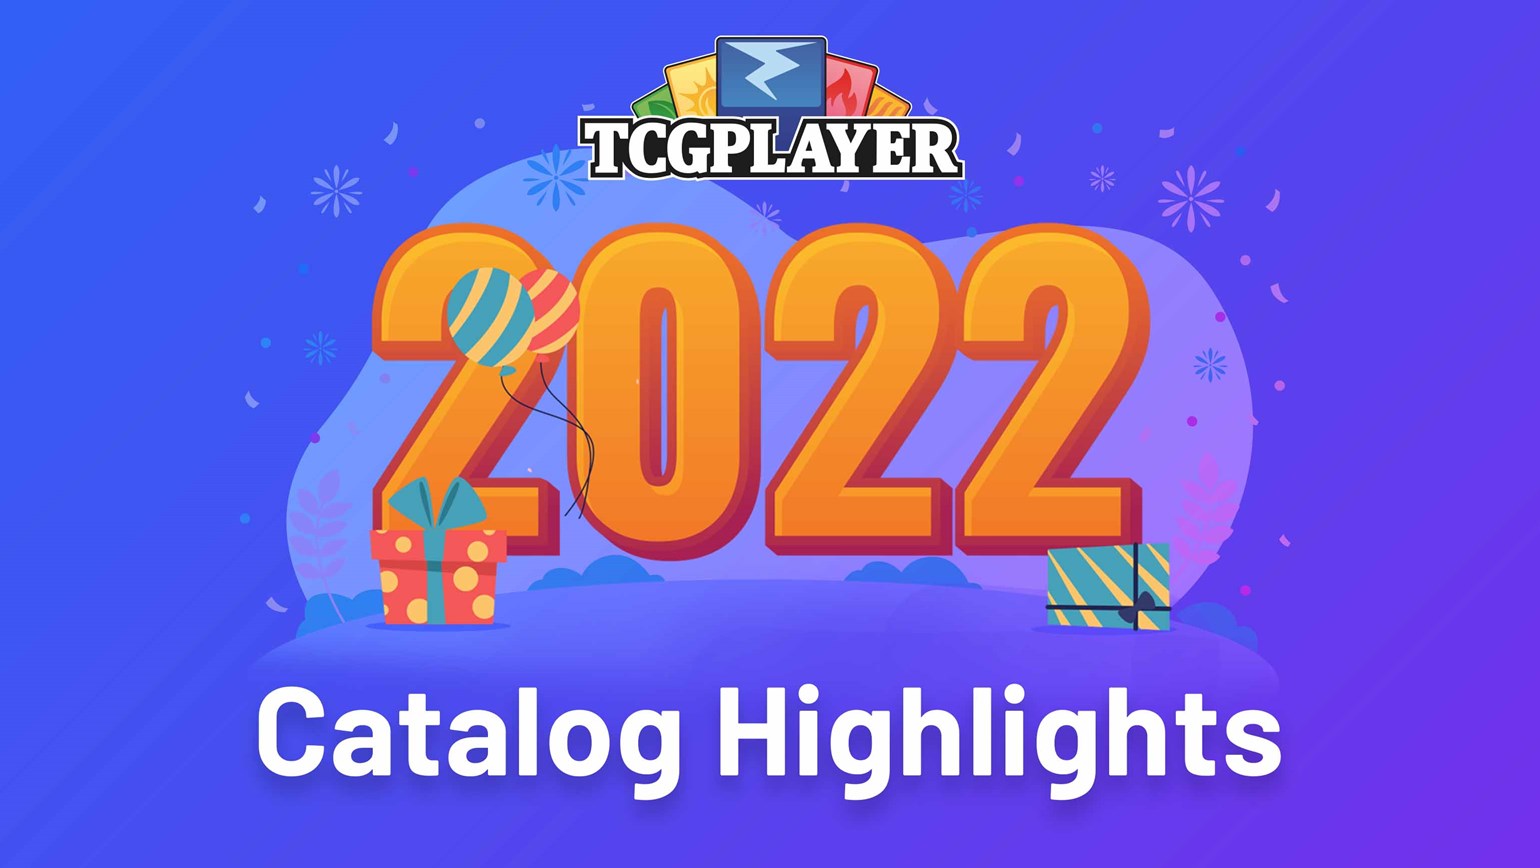 TCGplayer Catalog Highlights of 2022!